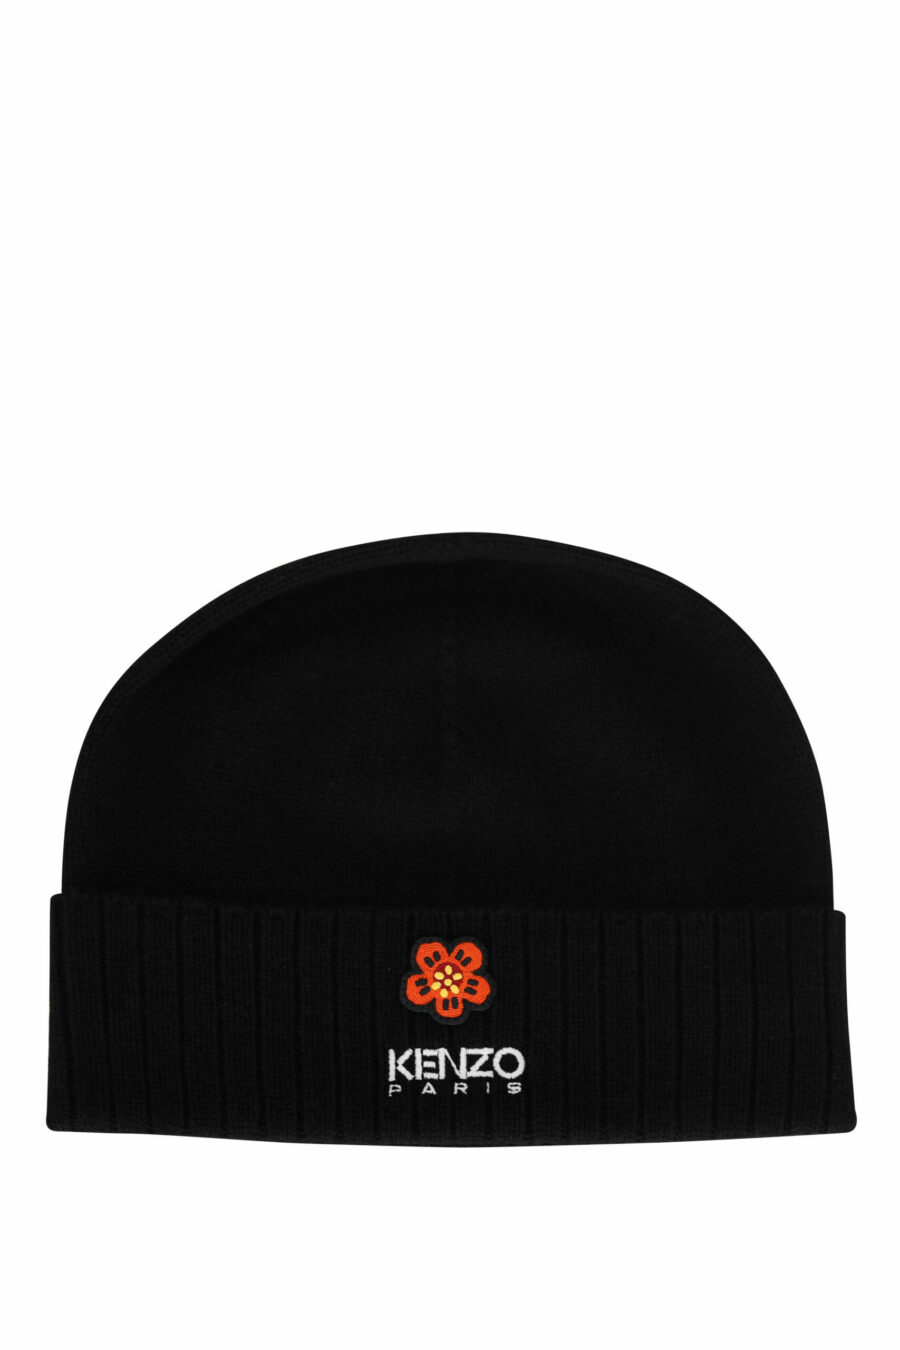 Schwarze Kappe mit "kenzo paris" Logo - 3612230524866 skaliert